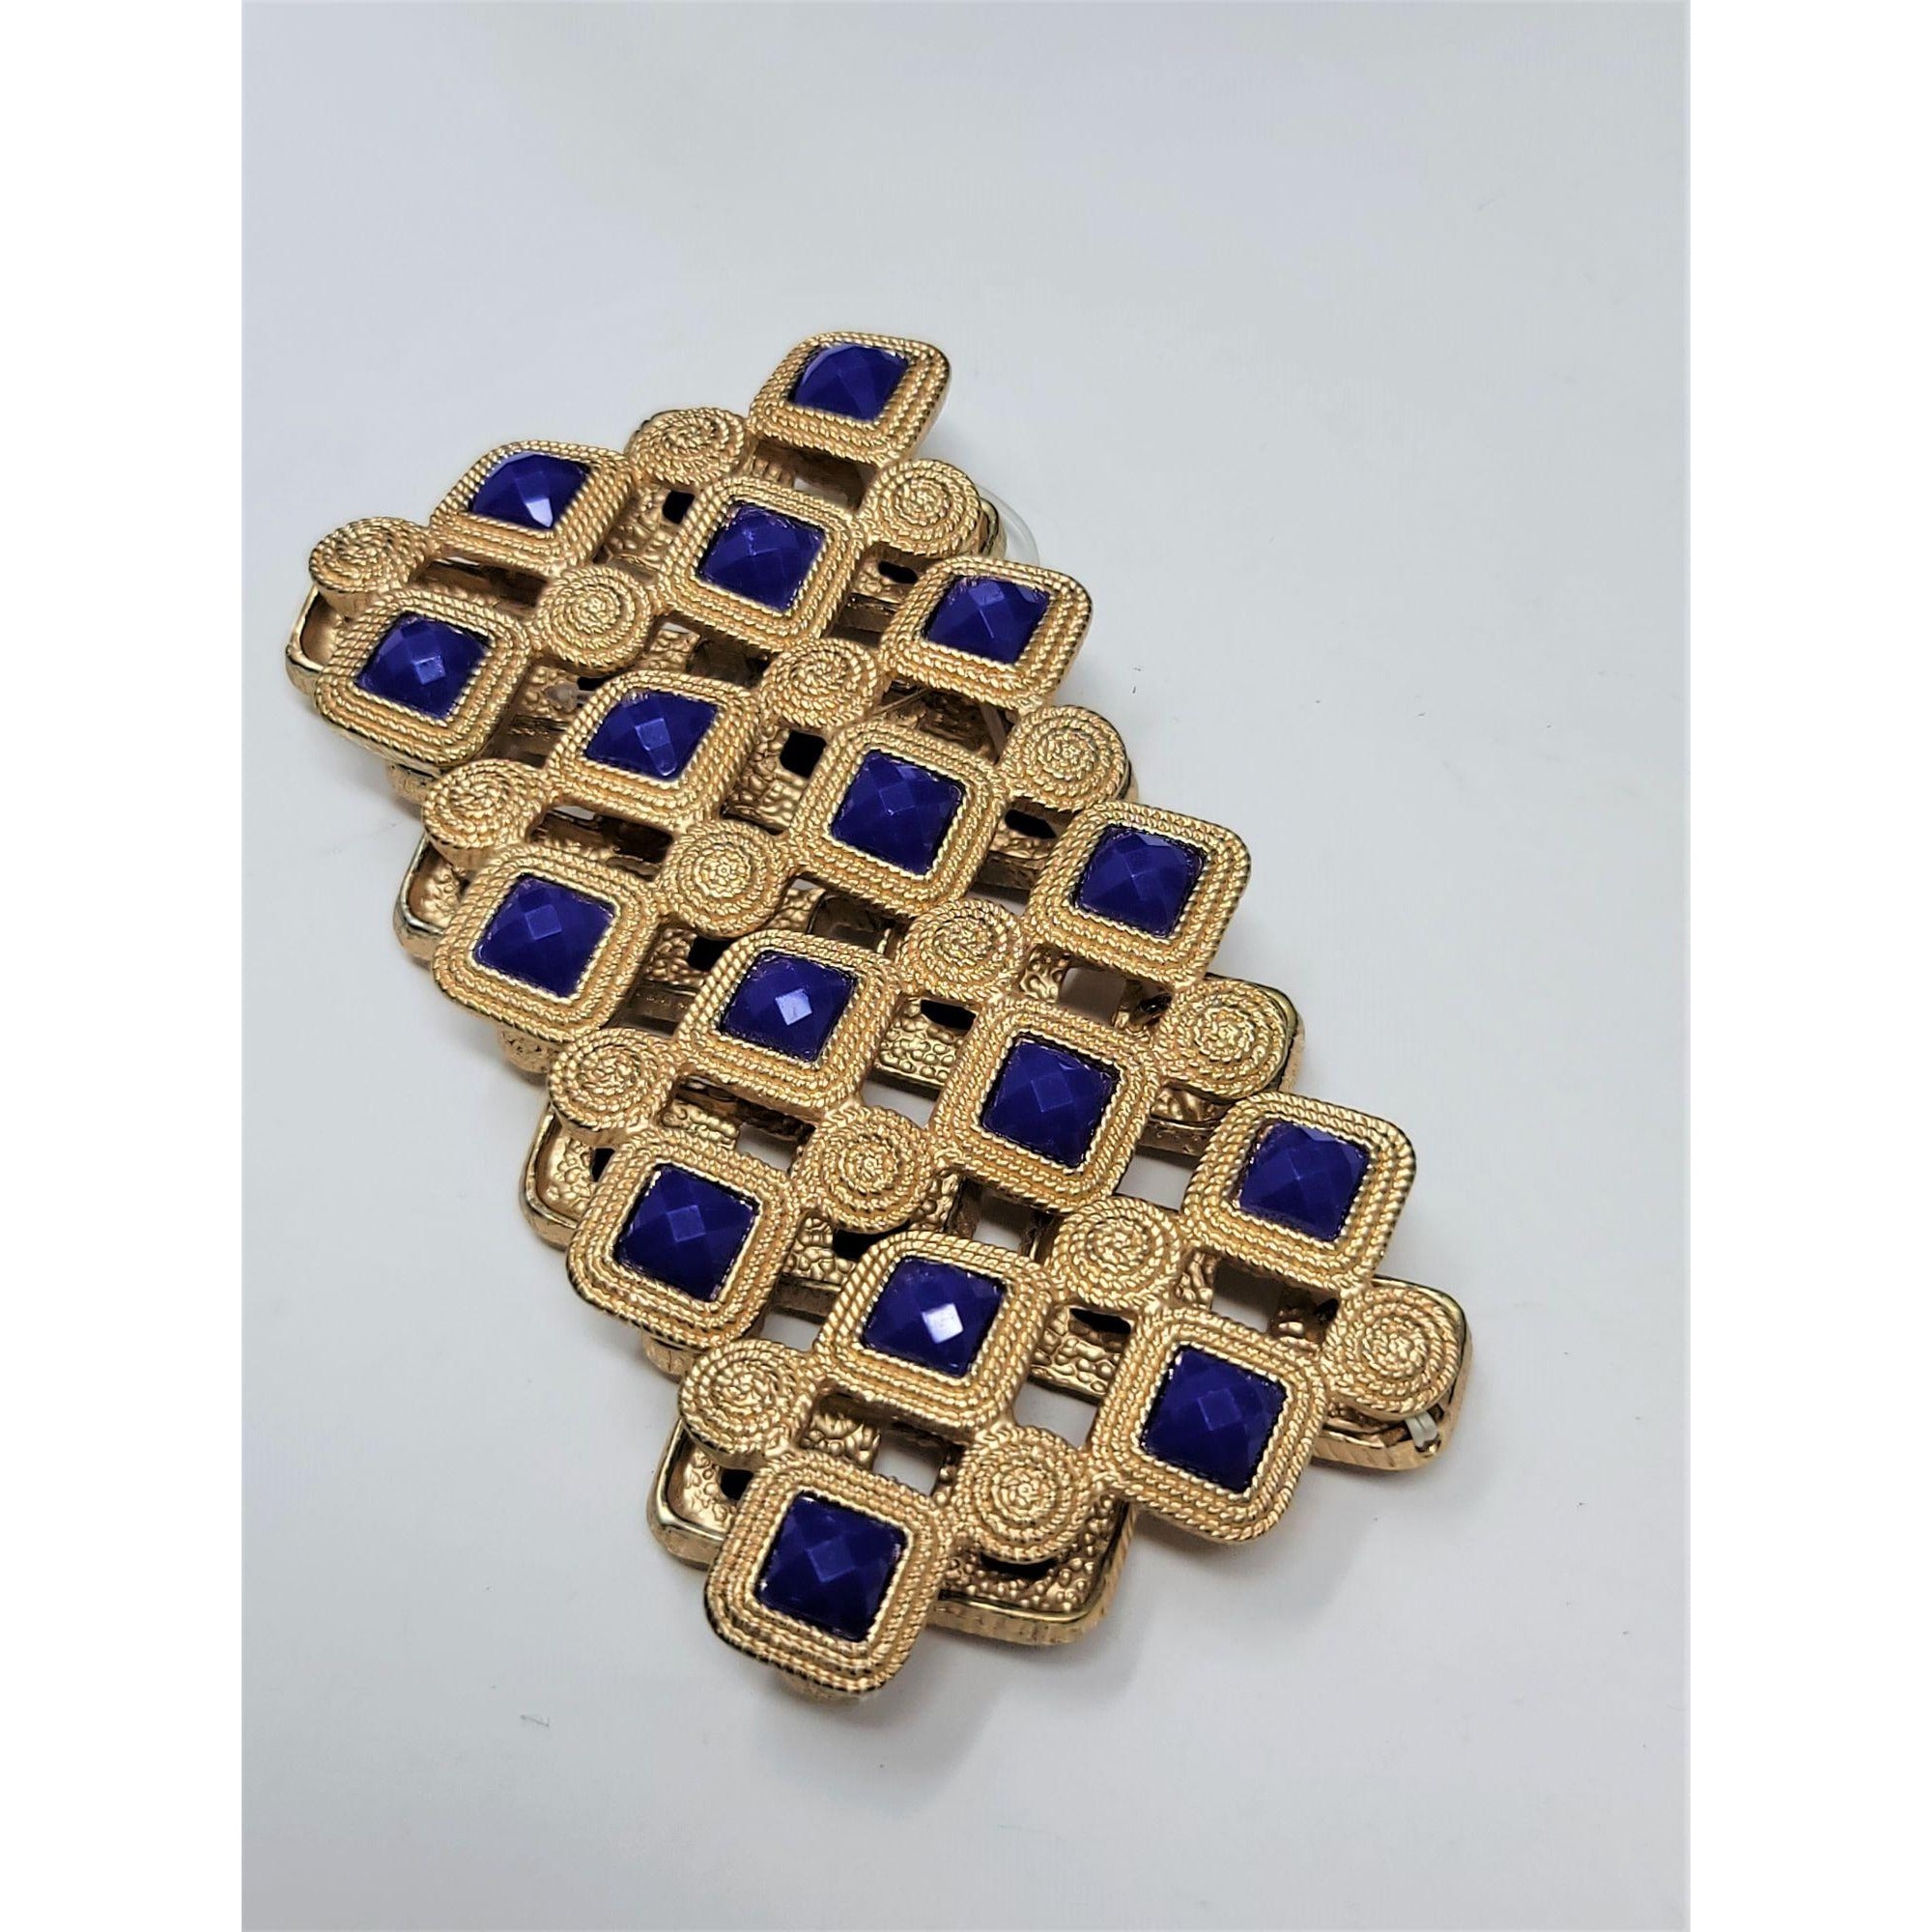 Stunning Gold & Blue Stretch Bracelet 2″ Wide